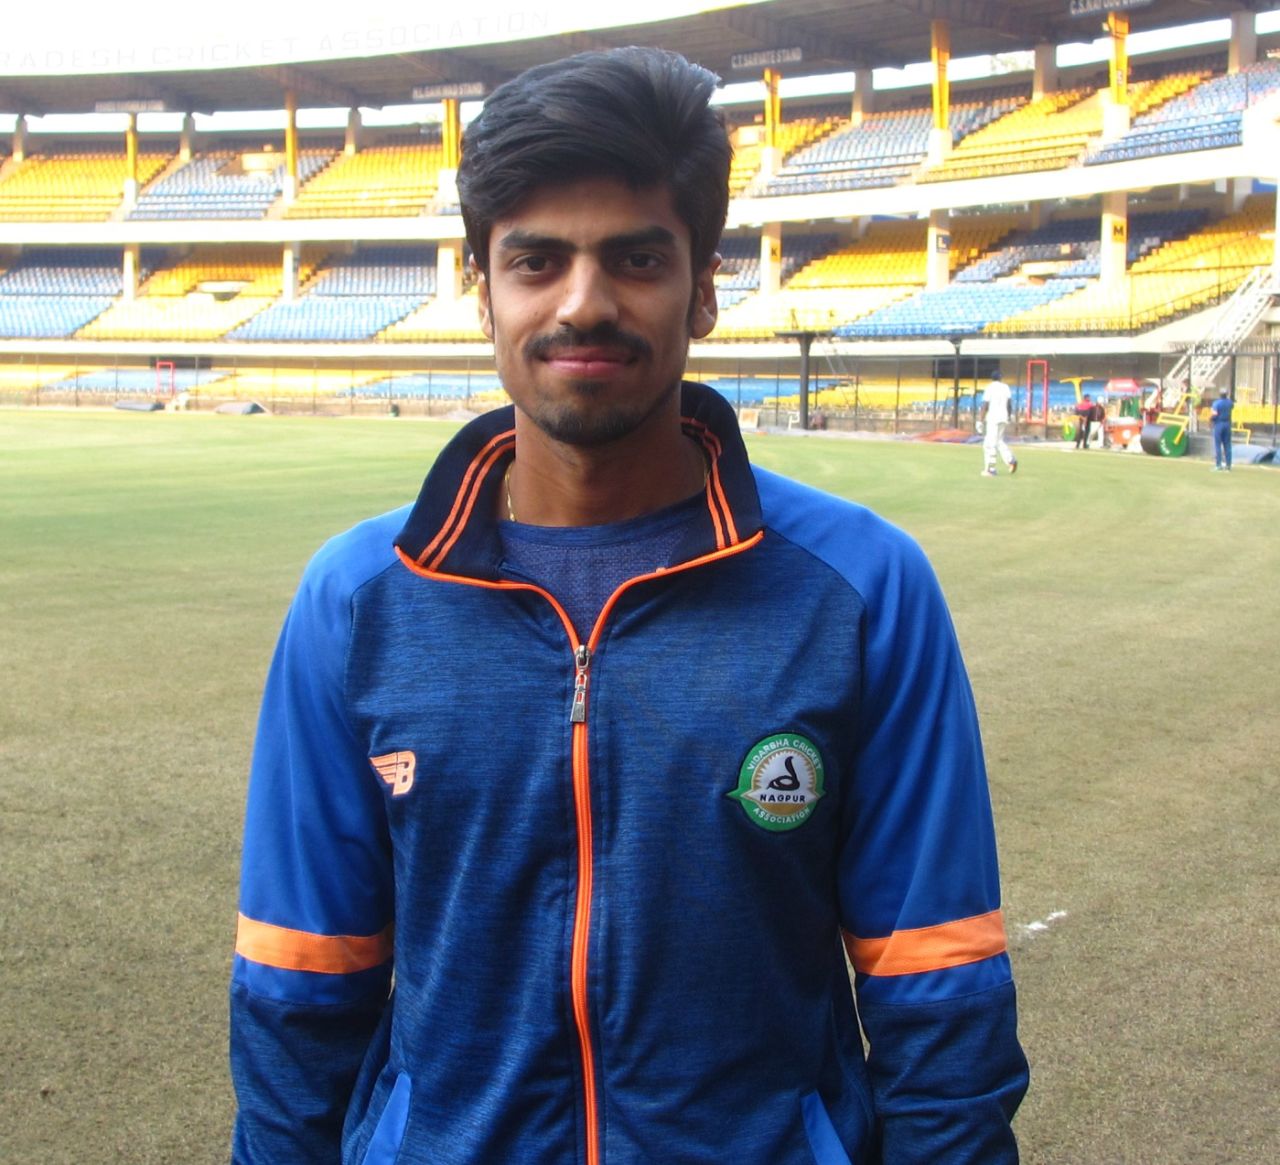 Player portrait: Rajneesh Gurbani